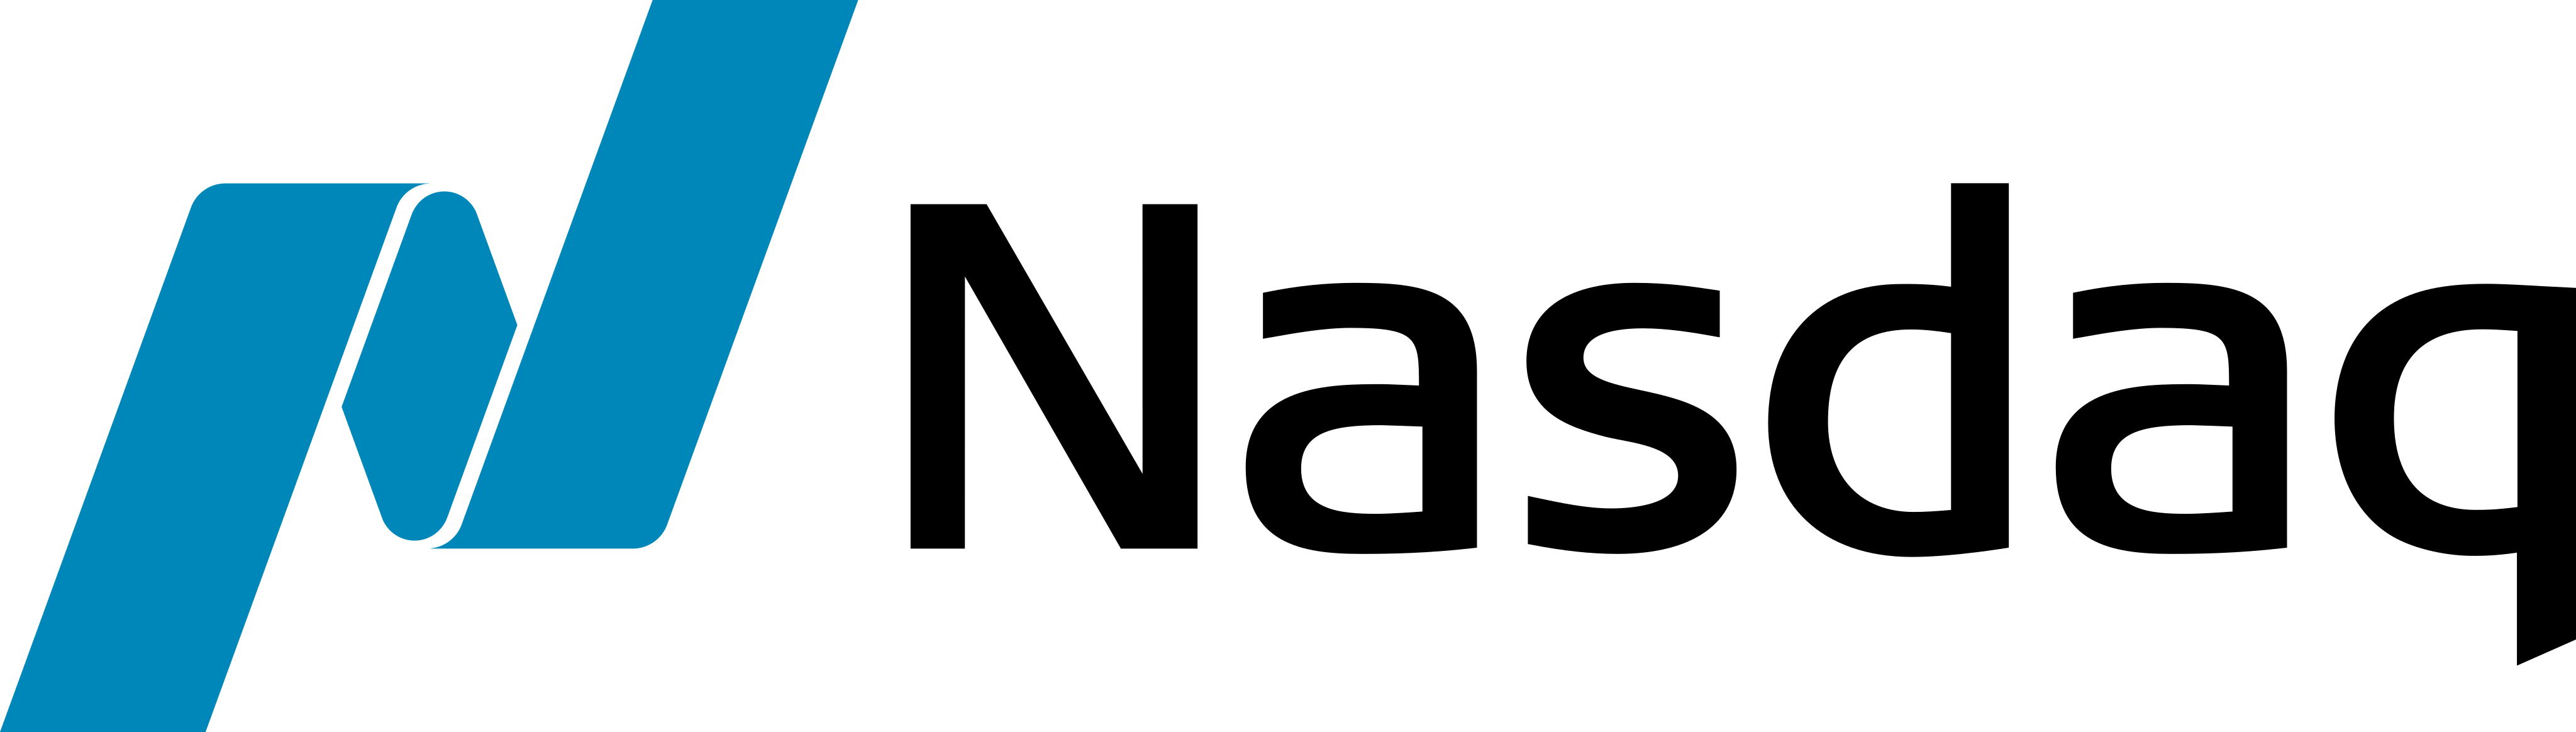 nasdaq logo - Nasdaq Logo